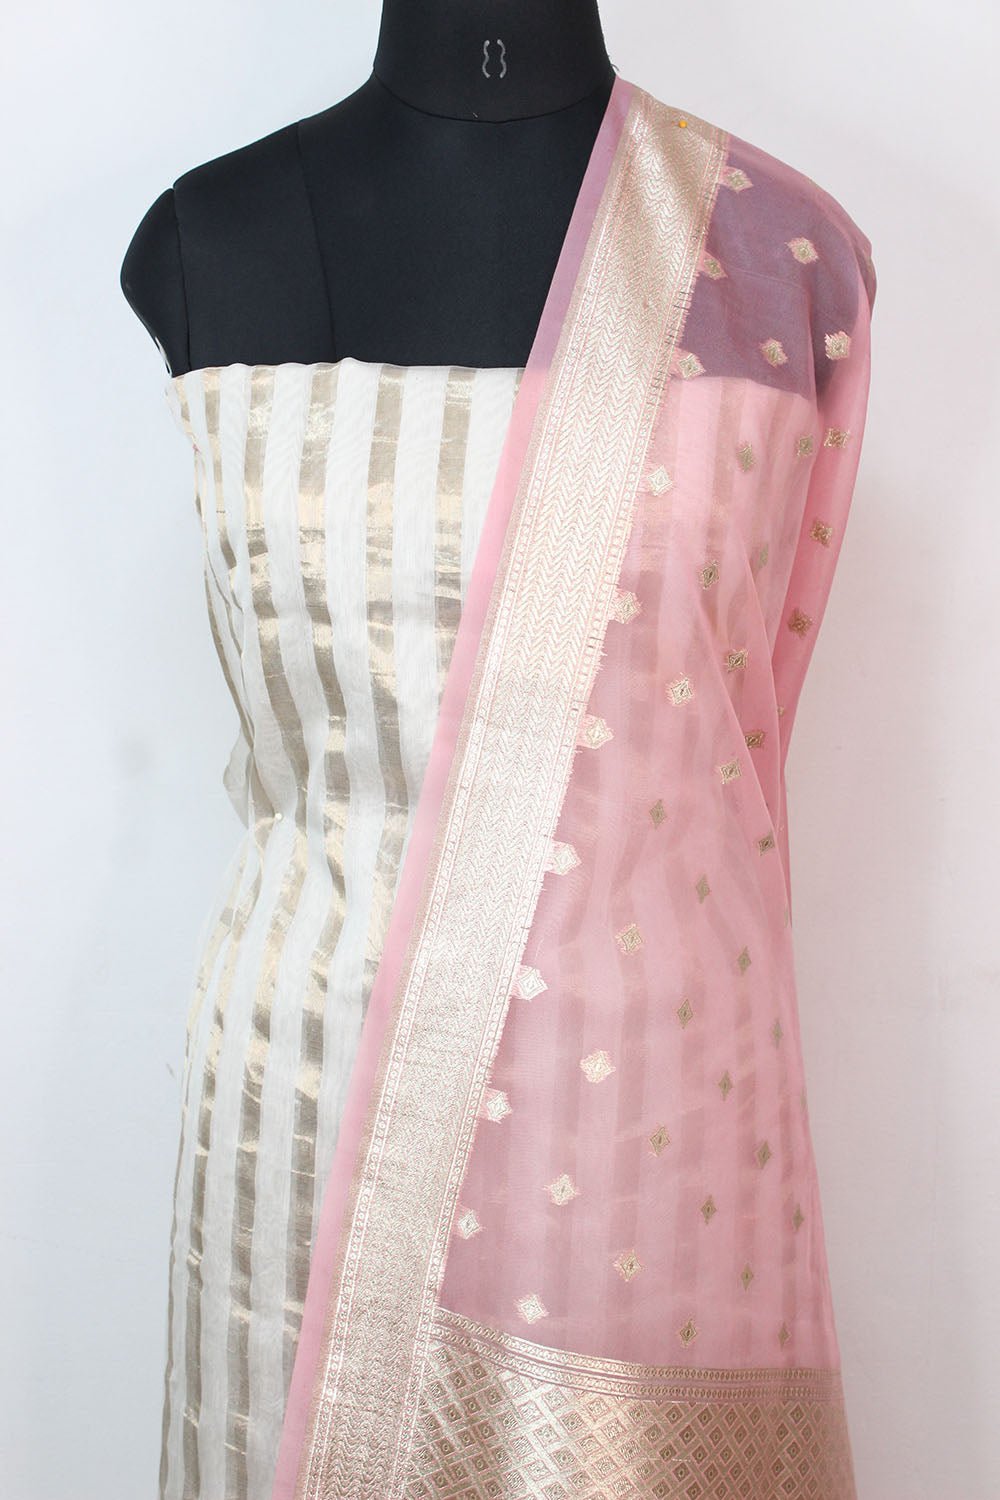 Off White Banarasi Chanderi Silk Suit With Pink Banarasi Organza Dupatta - Luxurion World